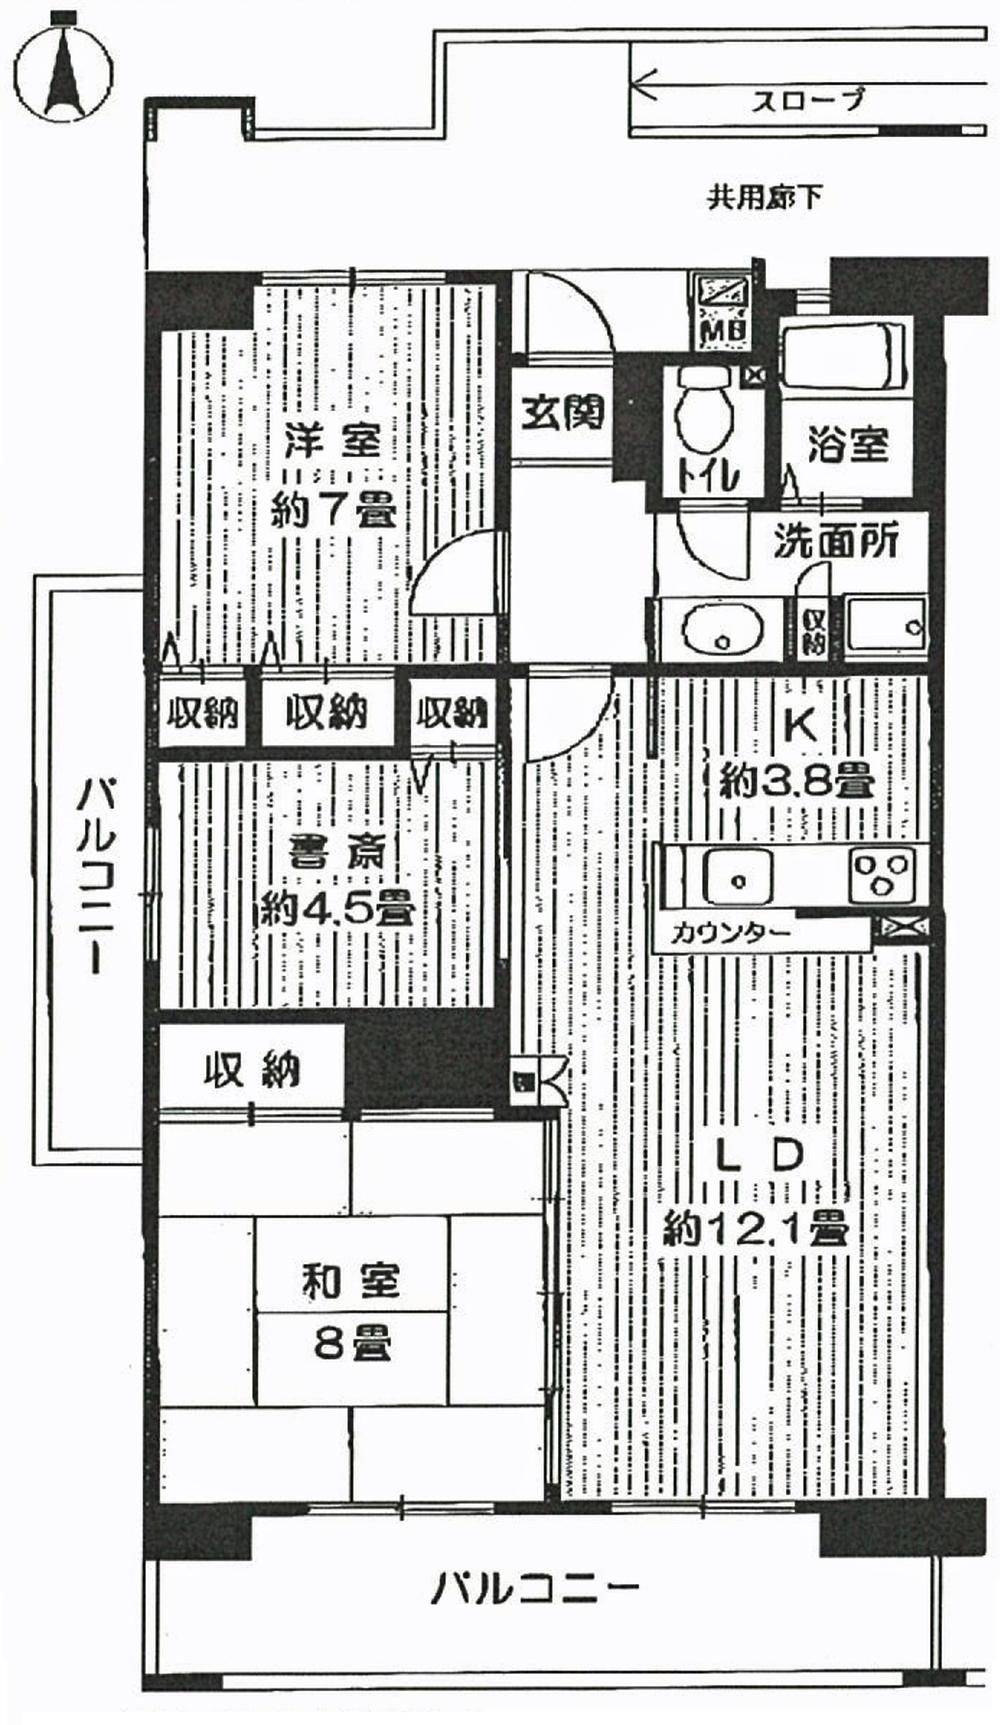 Floor plan. 2LDK + S (storeroom), Price 24,800,000 yen, Occupied area 80.33 sq m , Balcony area 15.7 sq m